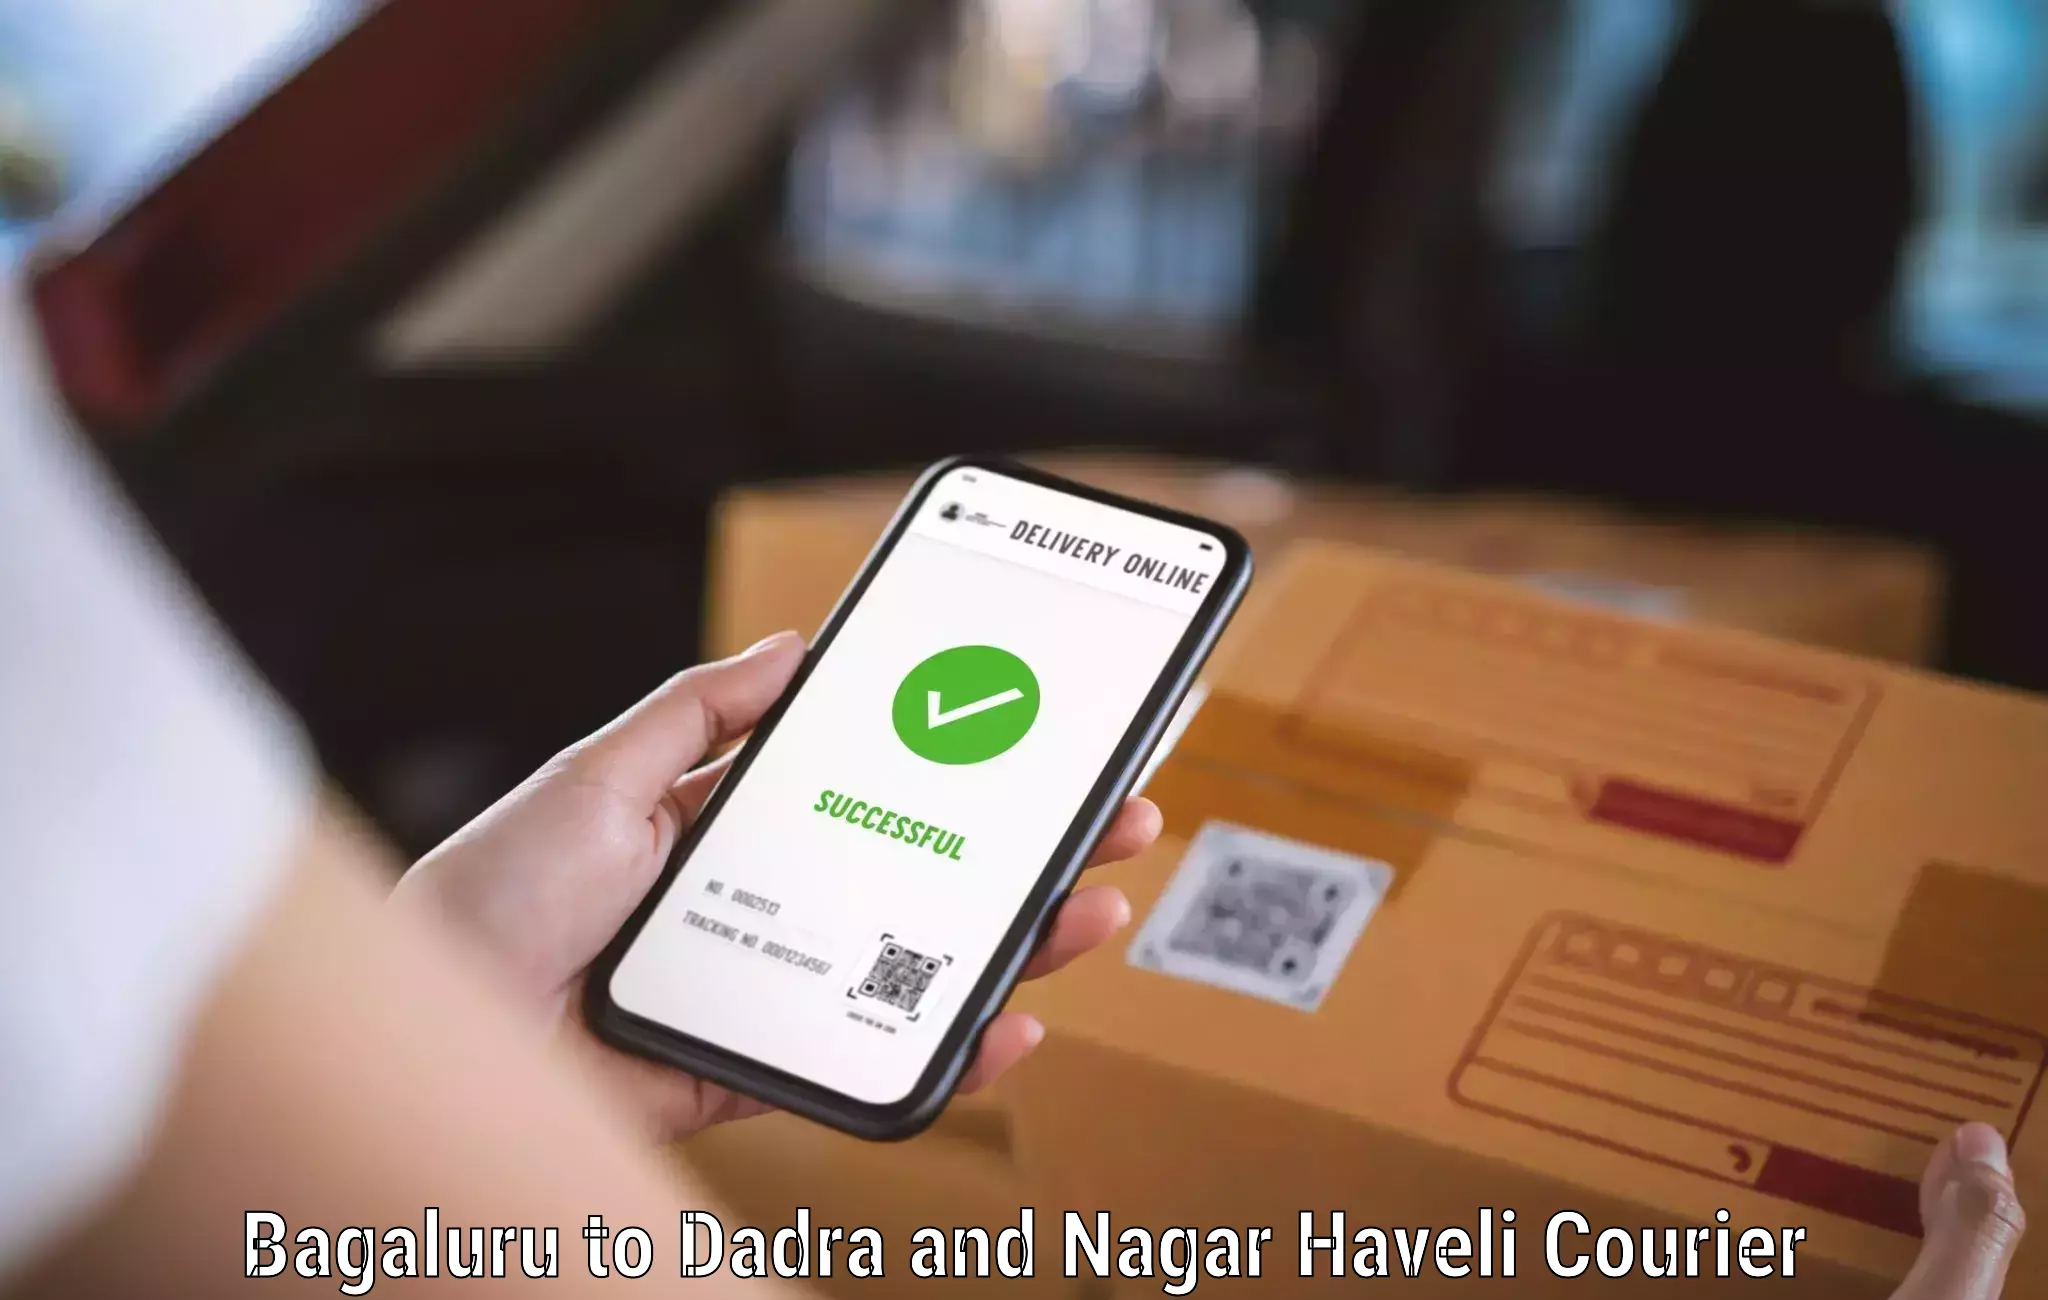 Courier service comparison Bagaluru to Dadra and Nagar Haveli